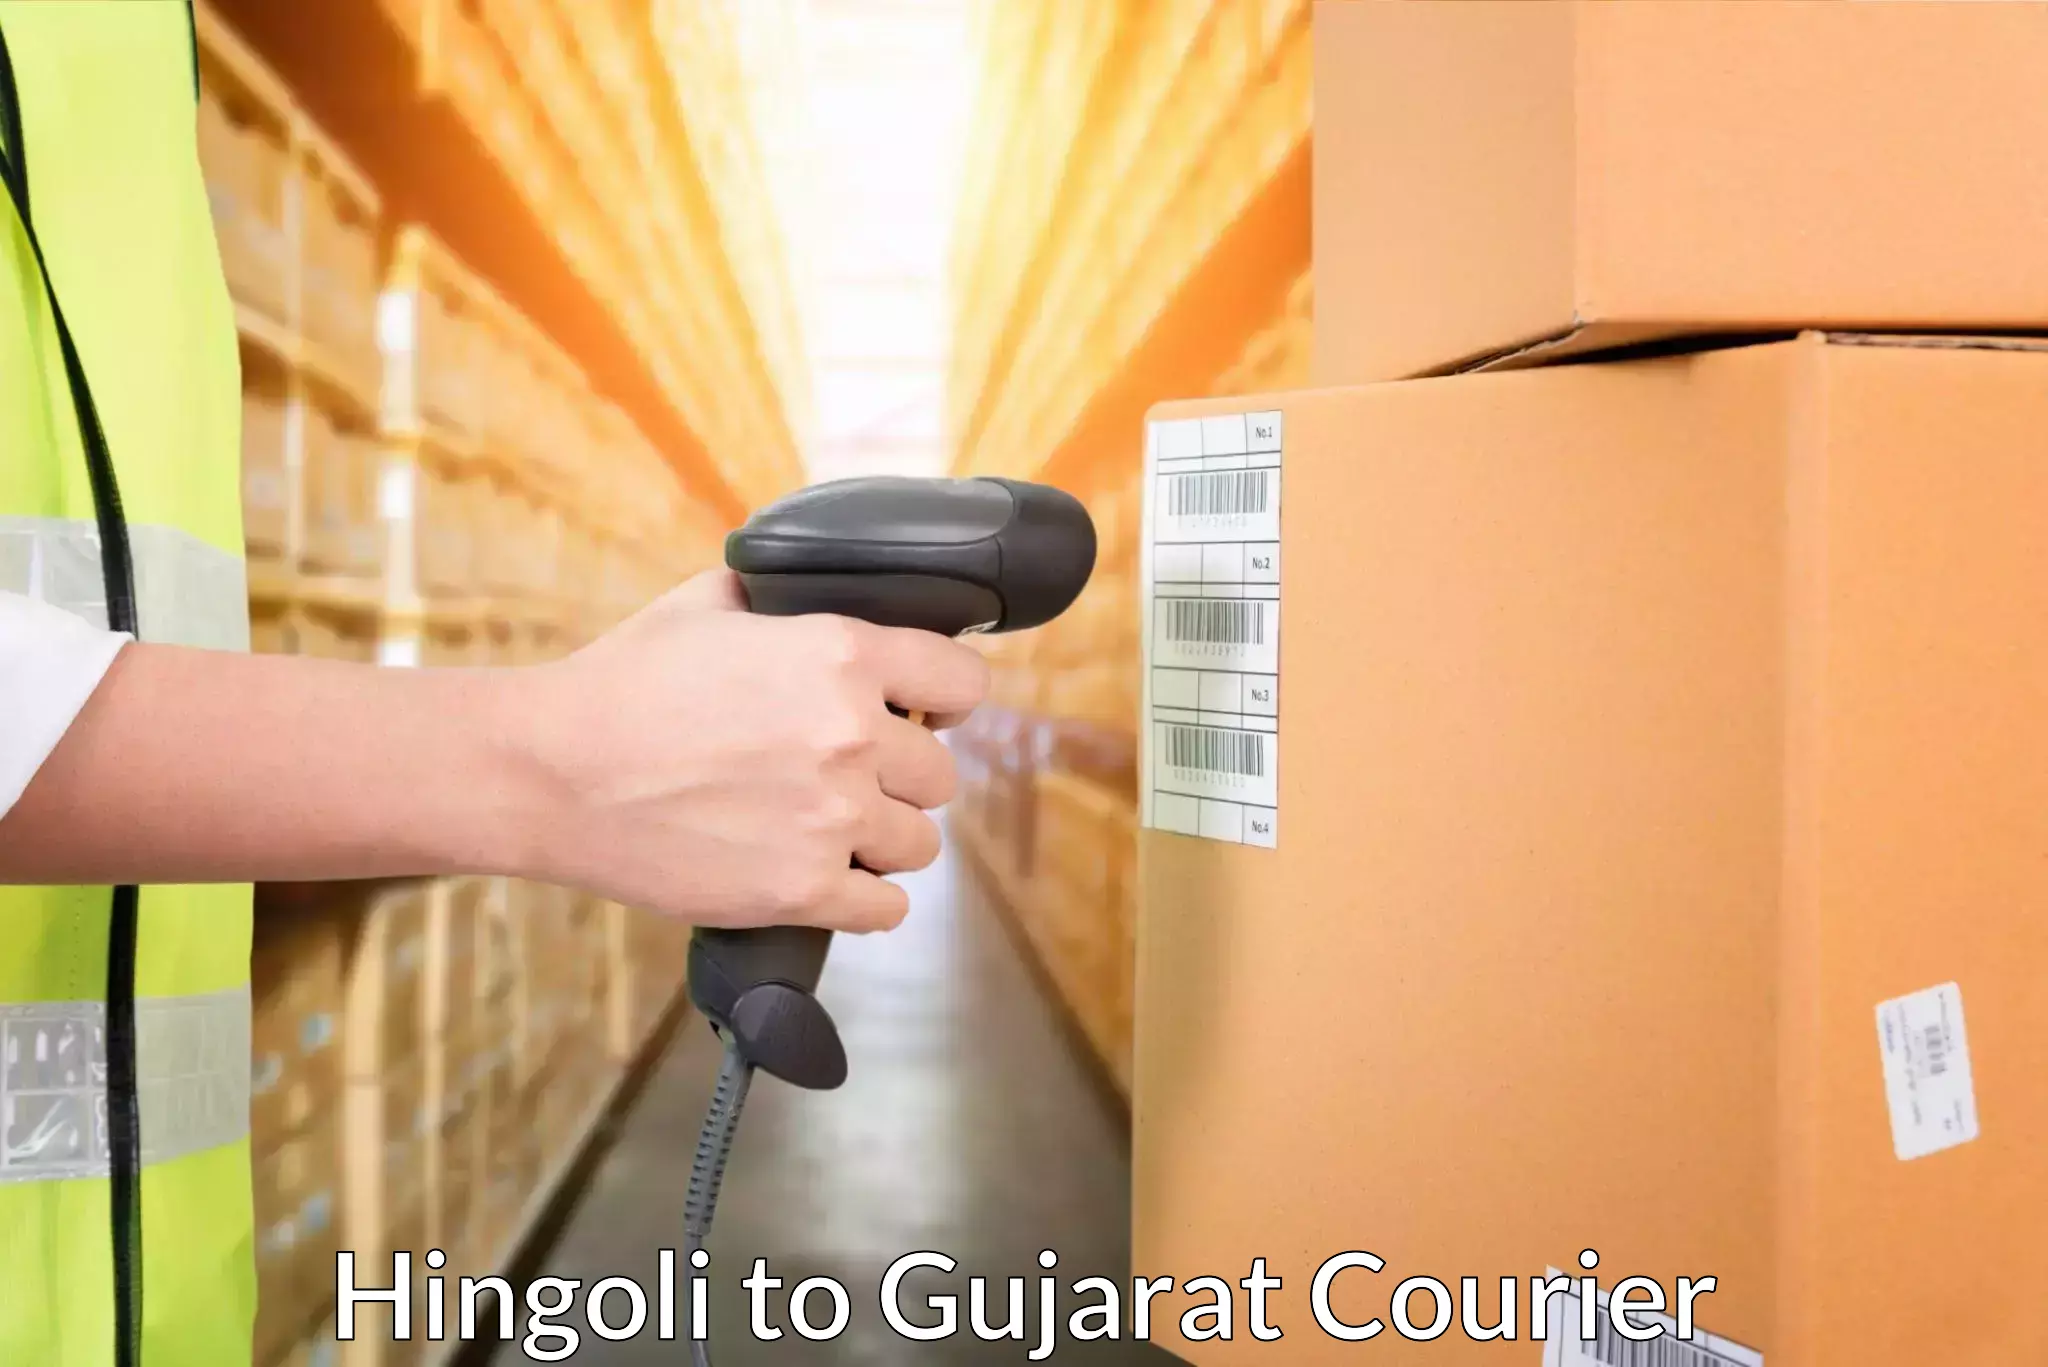 Courier service innovation Hingoli to Patan Gujarat